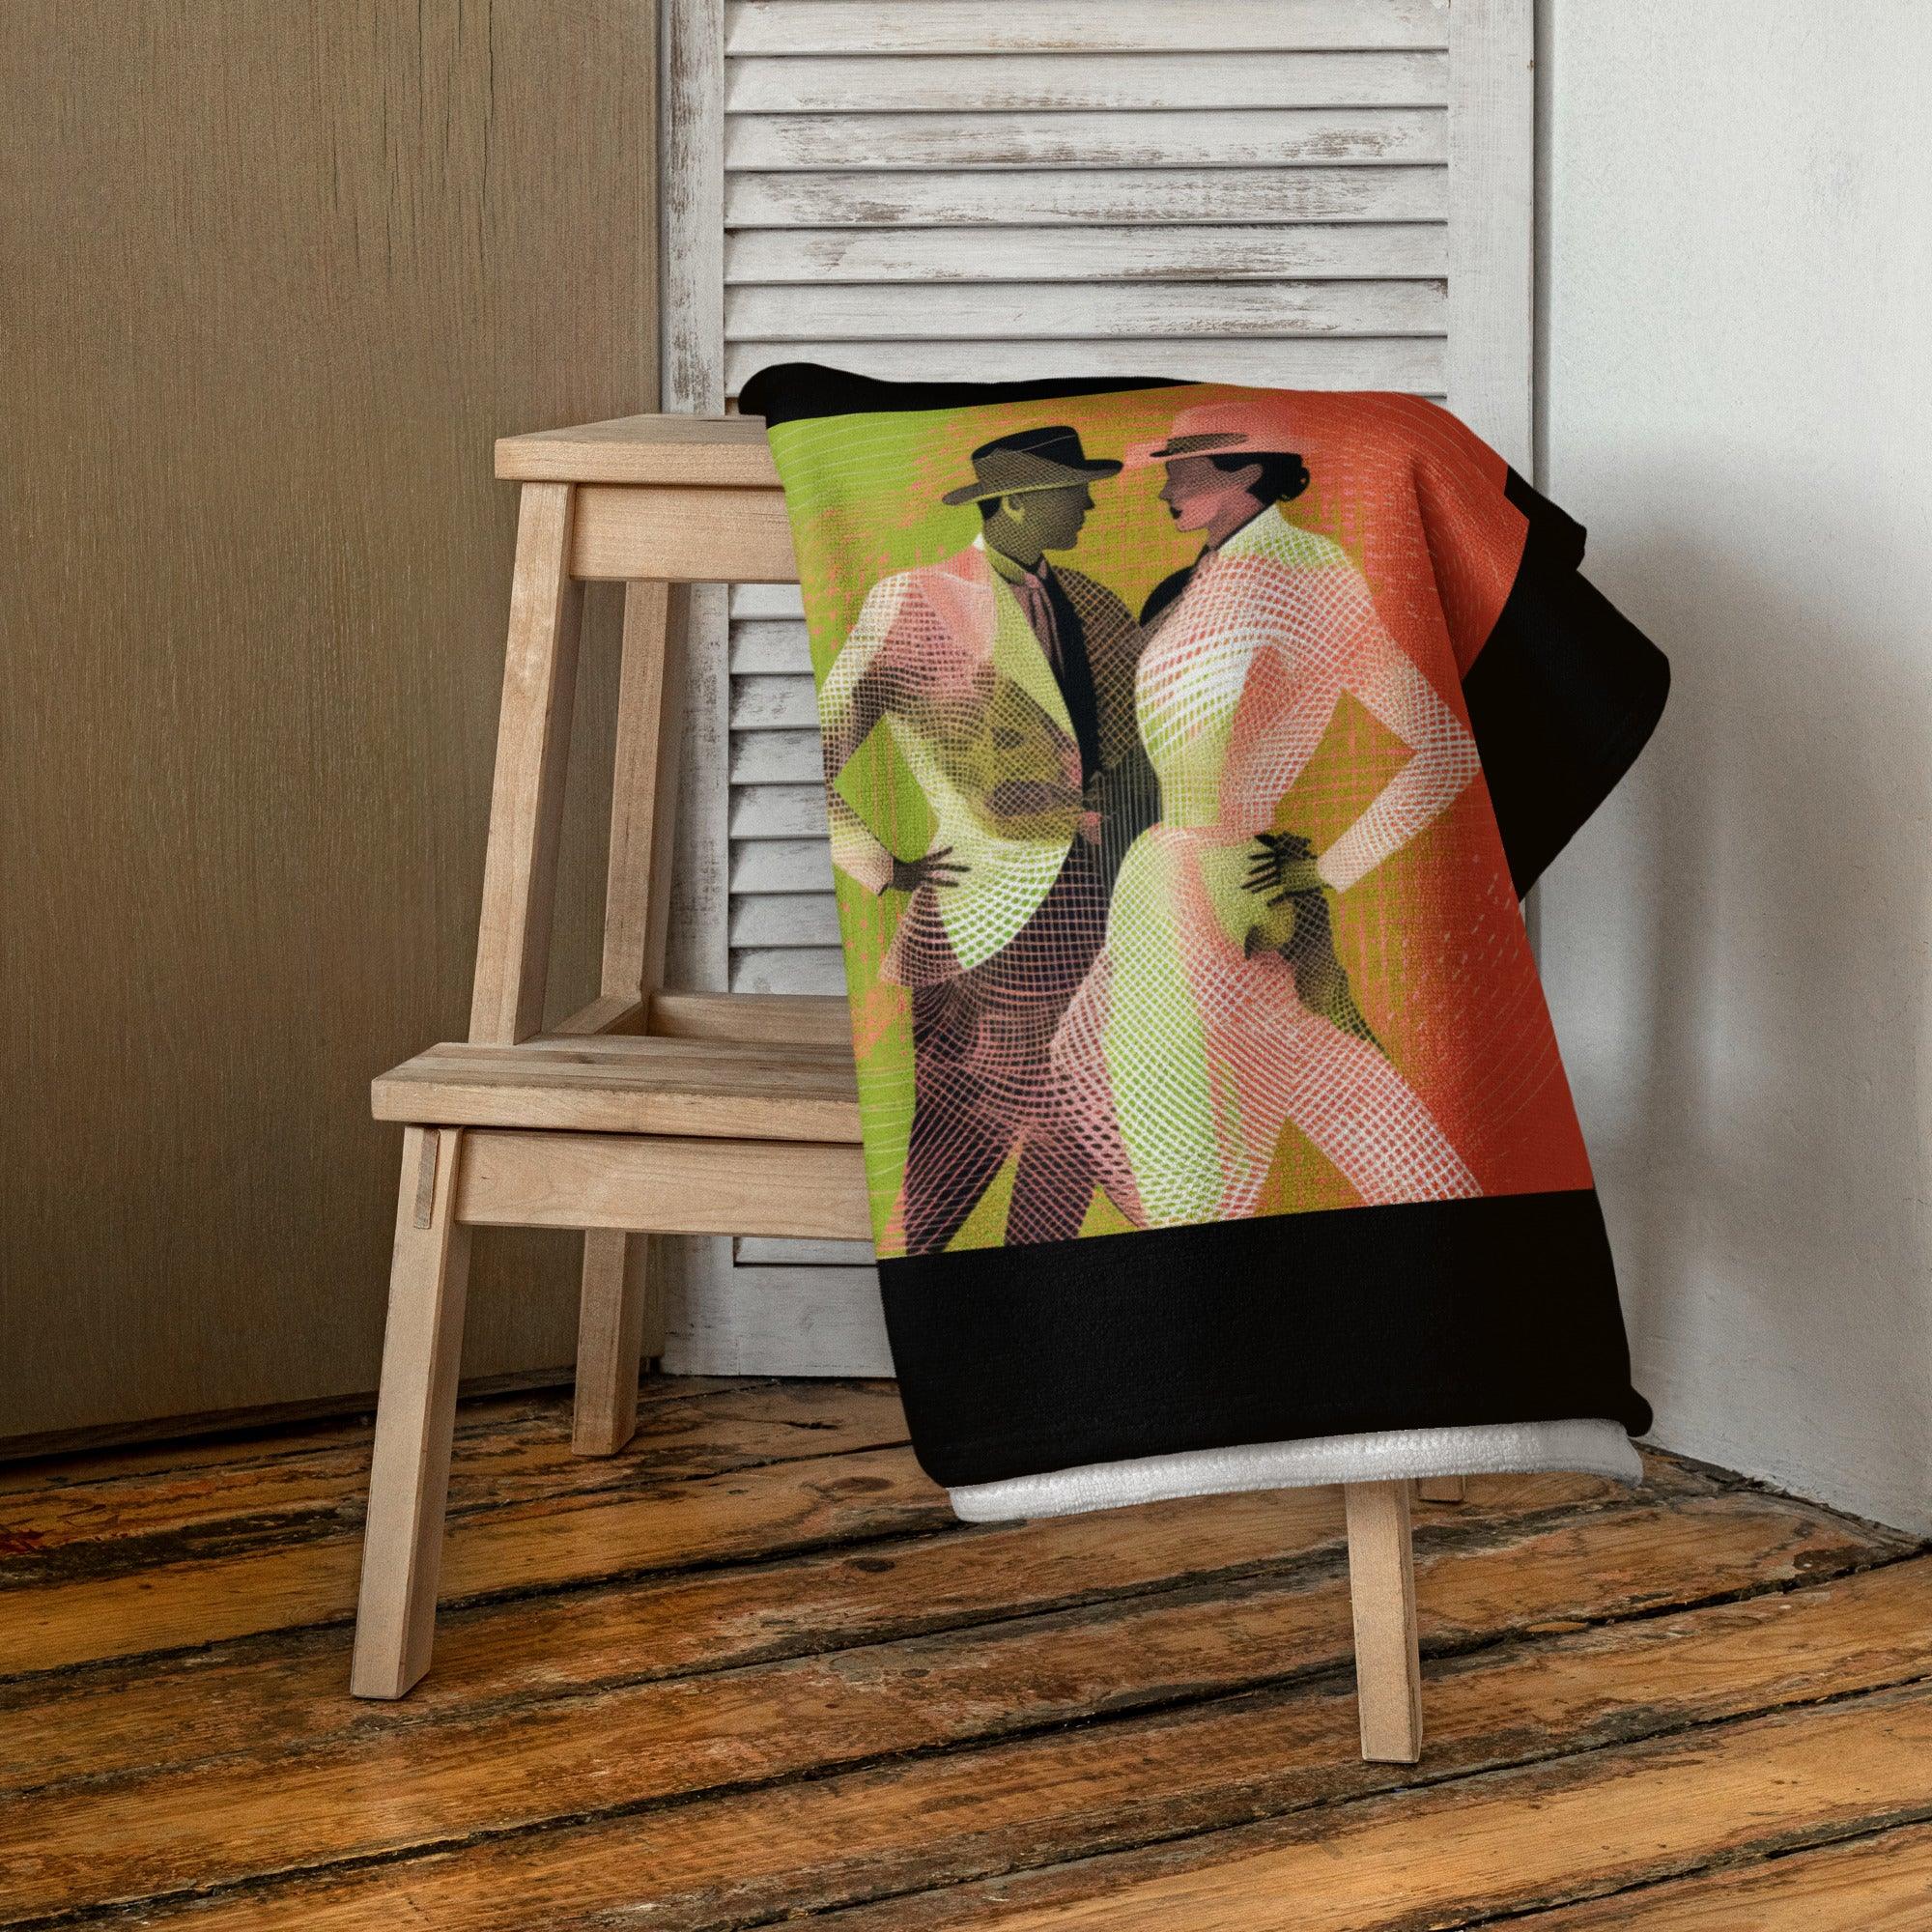 Elegant towel with a dancer's silhouette design.